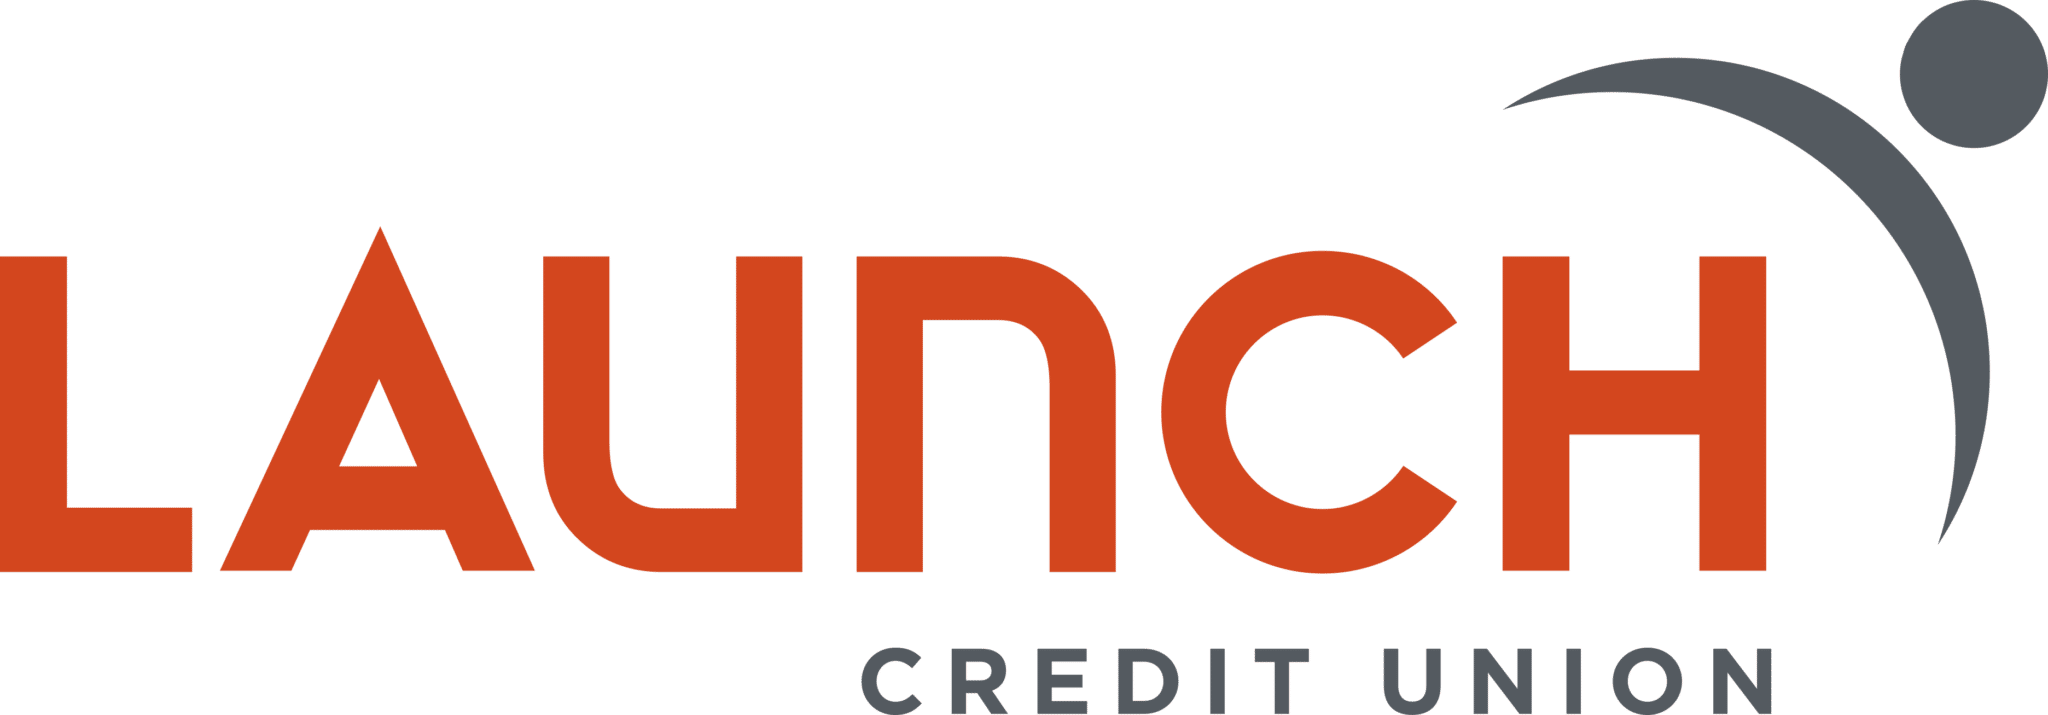 Credit and Debit Assessment